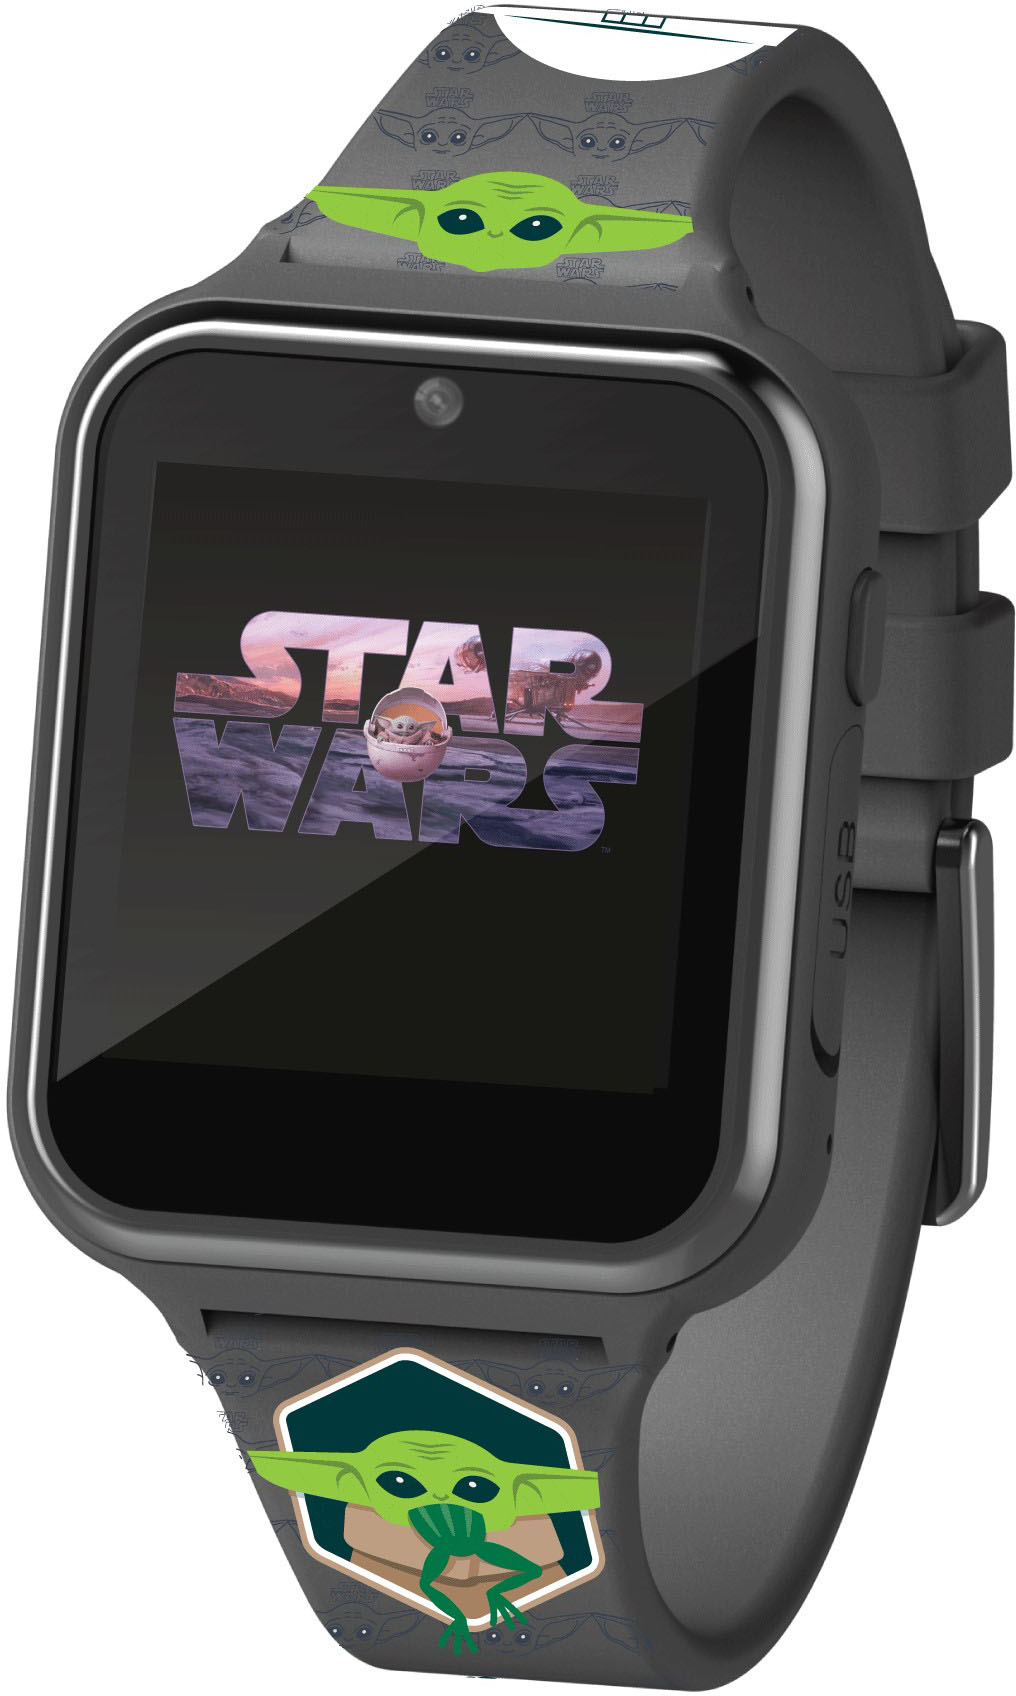 Angle View: Accutime - Star Wars Baby Yoda Smart Watch